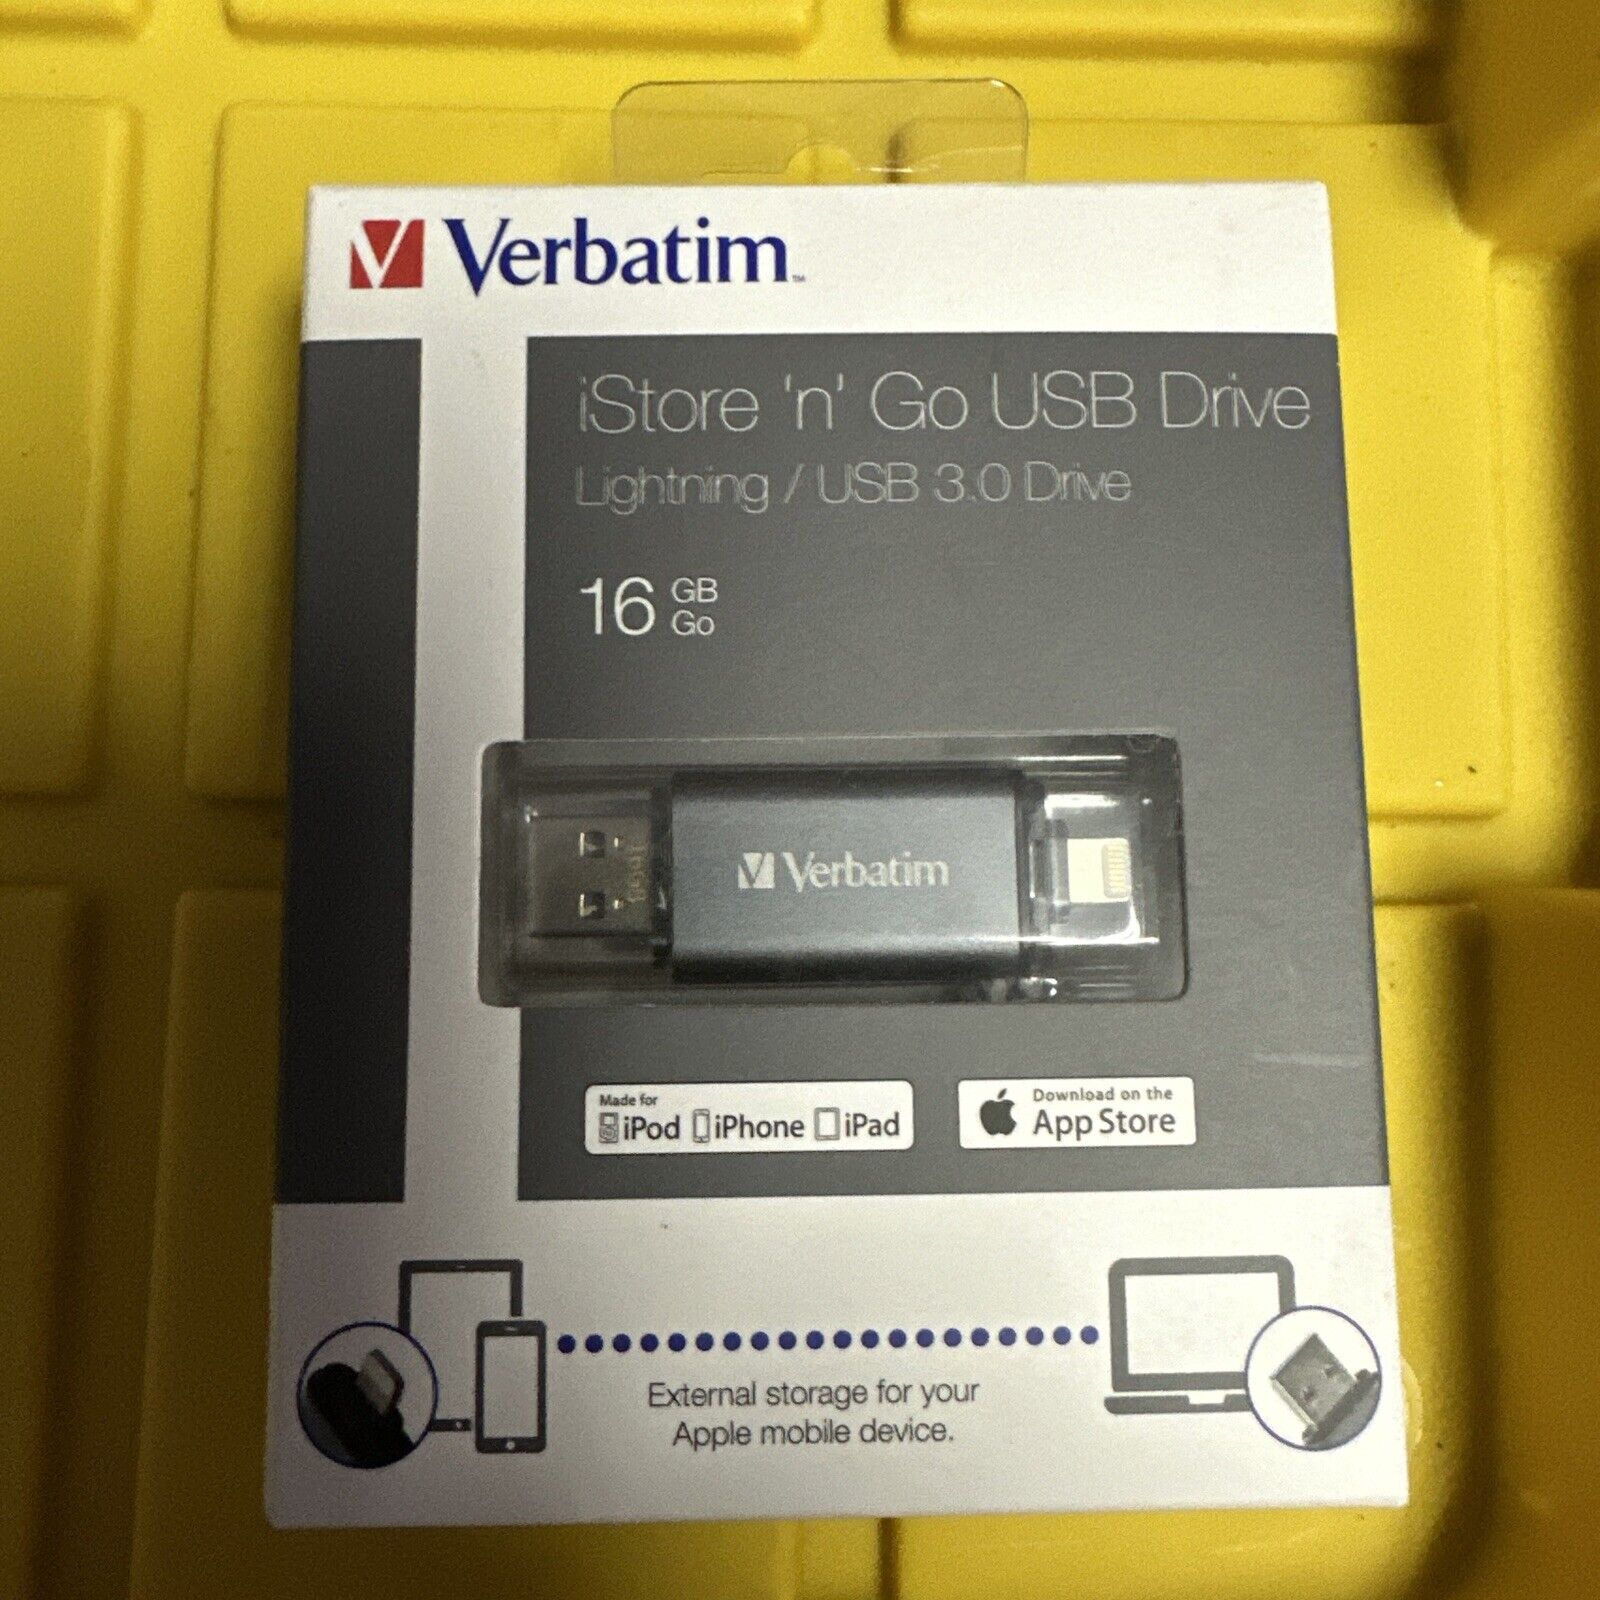 Verbatim 16GB Store 'n' Go Dual USB 3.0 and Lightning Flash Drive, Graphite